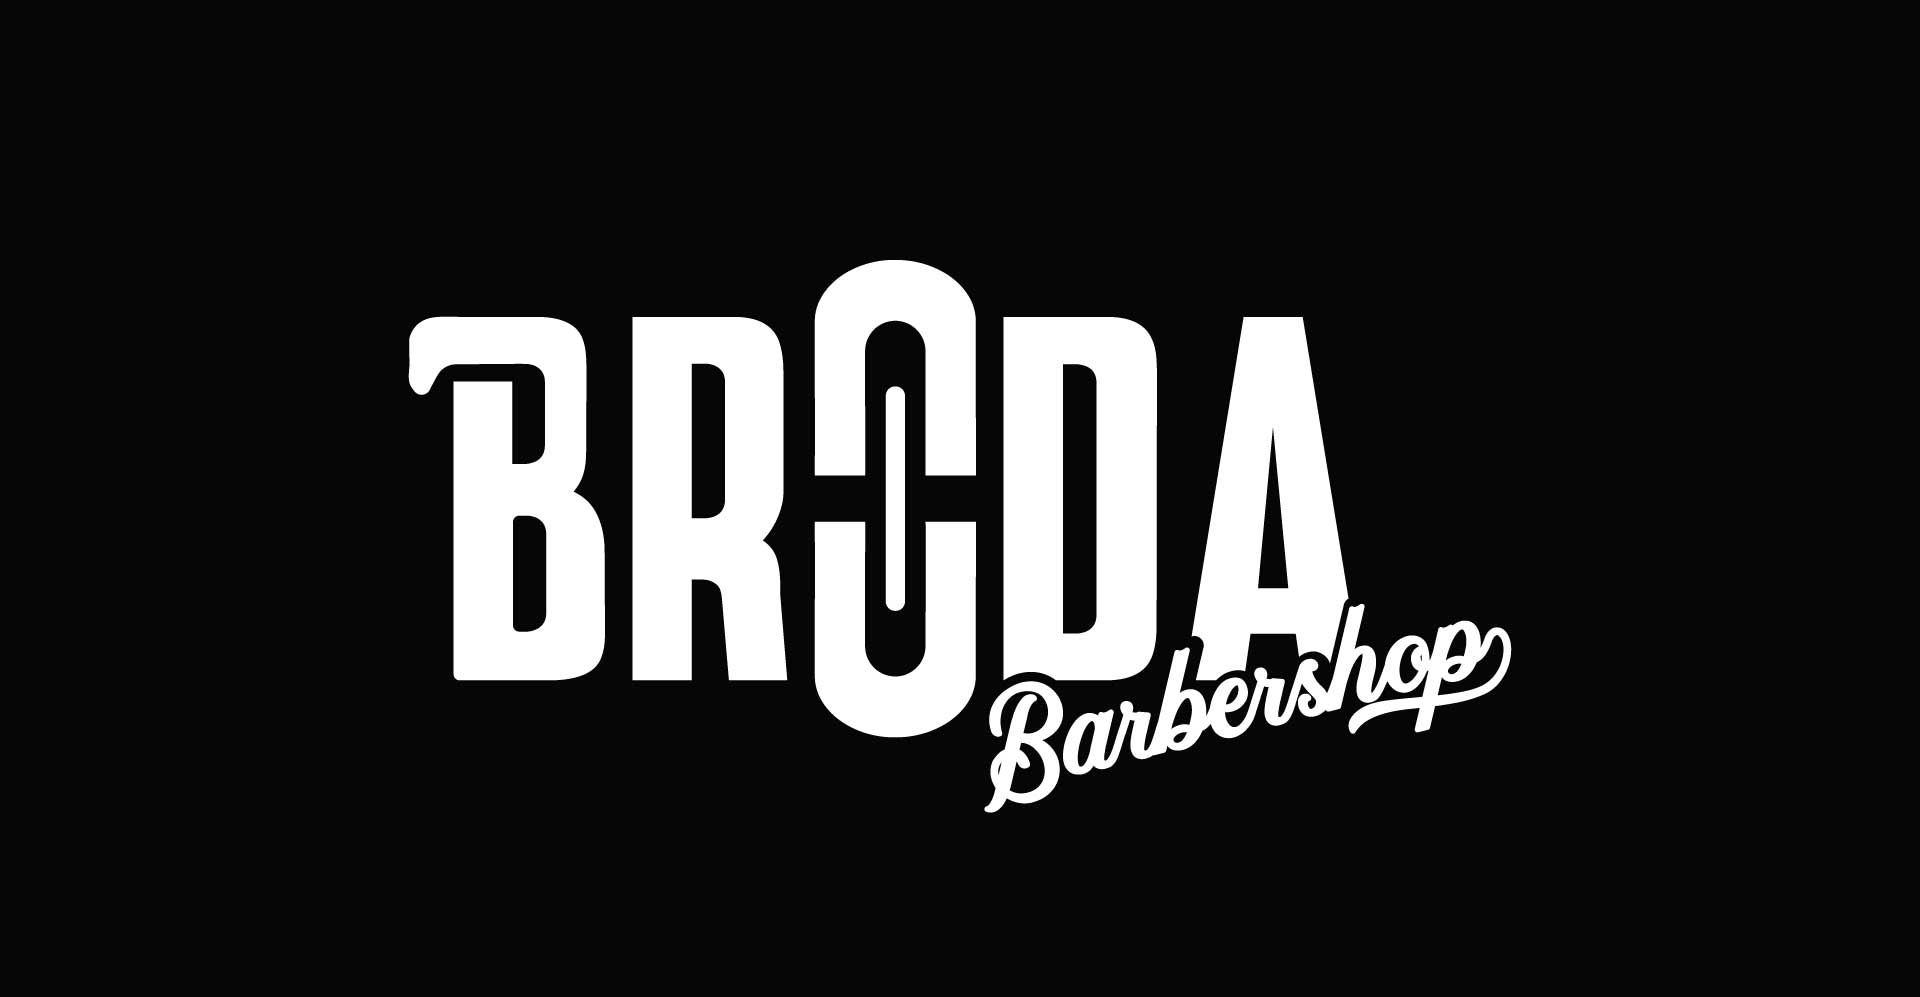 Logo Broda Barbershop fond noir